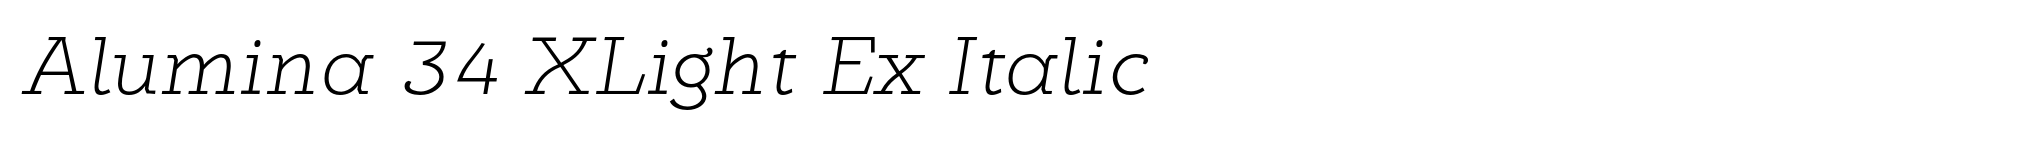 Alumina 34 XLight Ex Italic image